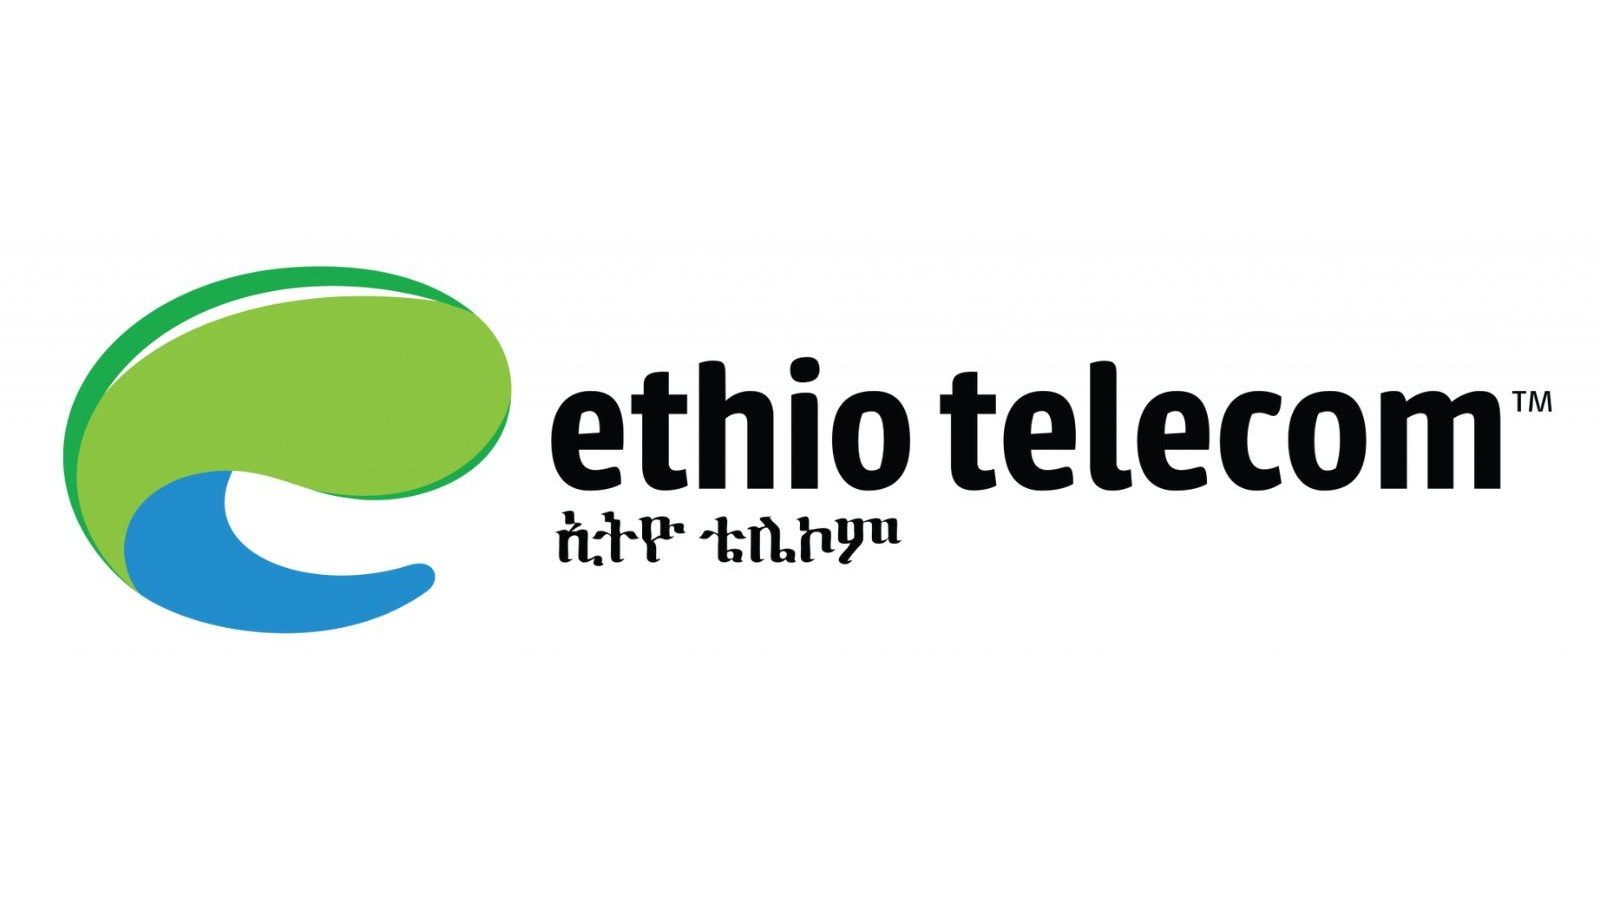 Ethiotelecom 5 ETB Mobile Top-up ET $0.68